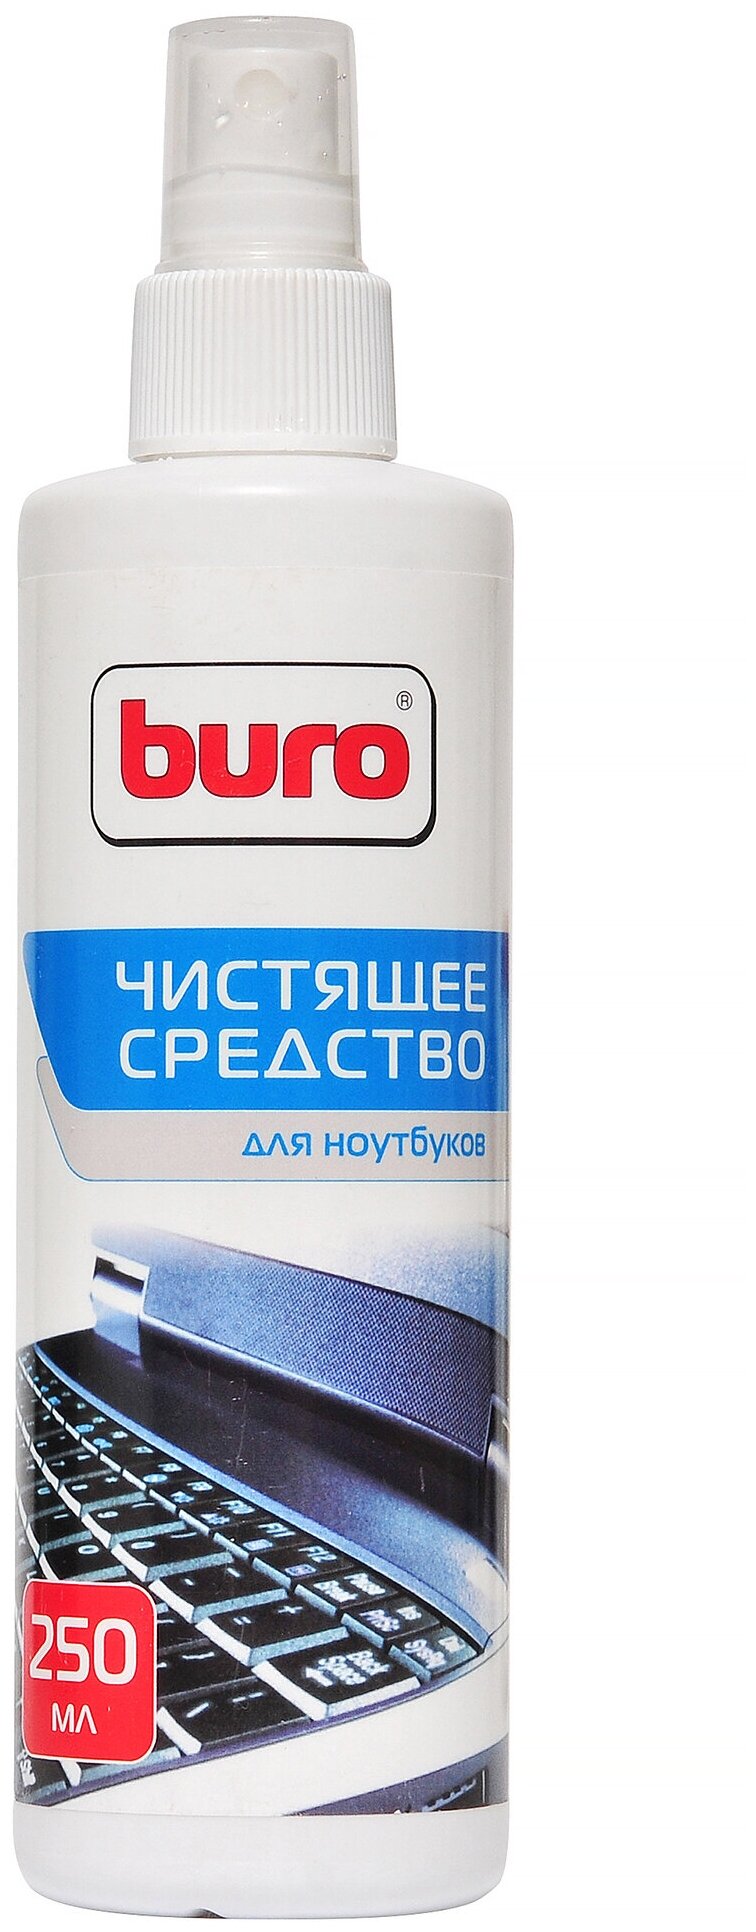 Buro BU-Snote чистящий спрей для оргтехники, для ноутбука, 250 мл, белый